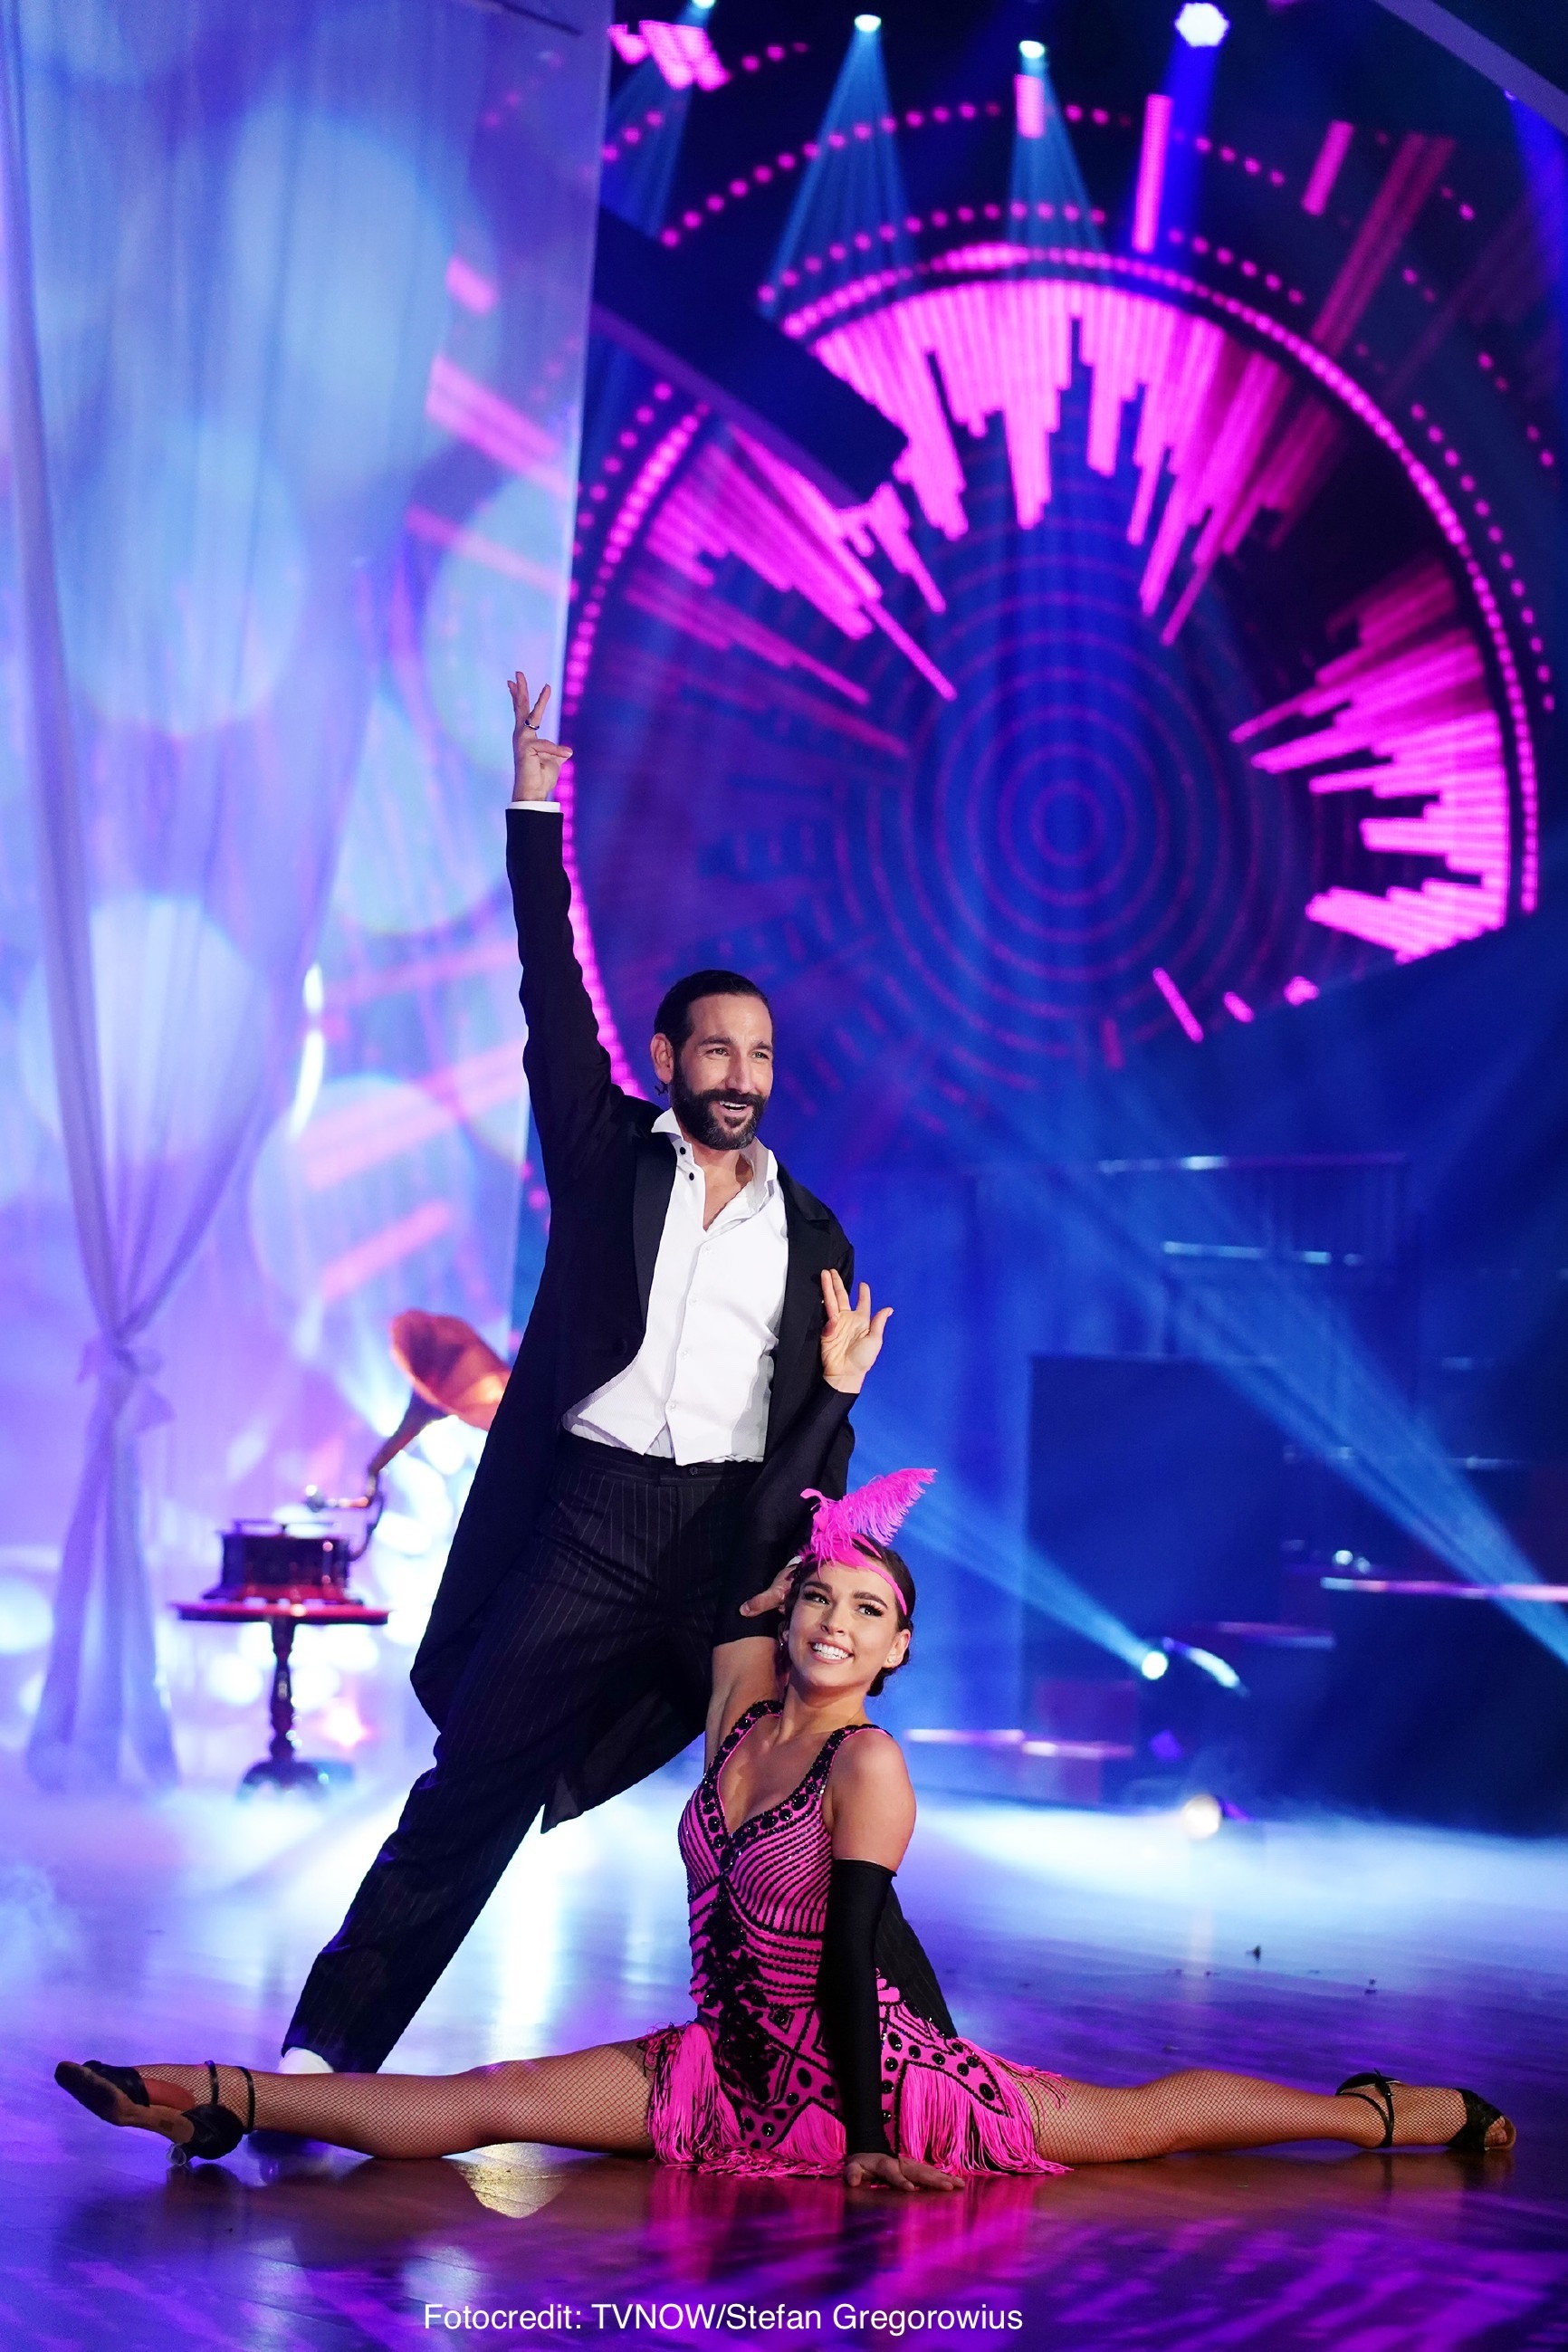  Lili Paul-Roncalli und Massimo Sinató bei RTL Let's Dance 2020 Folge 9